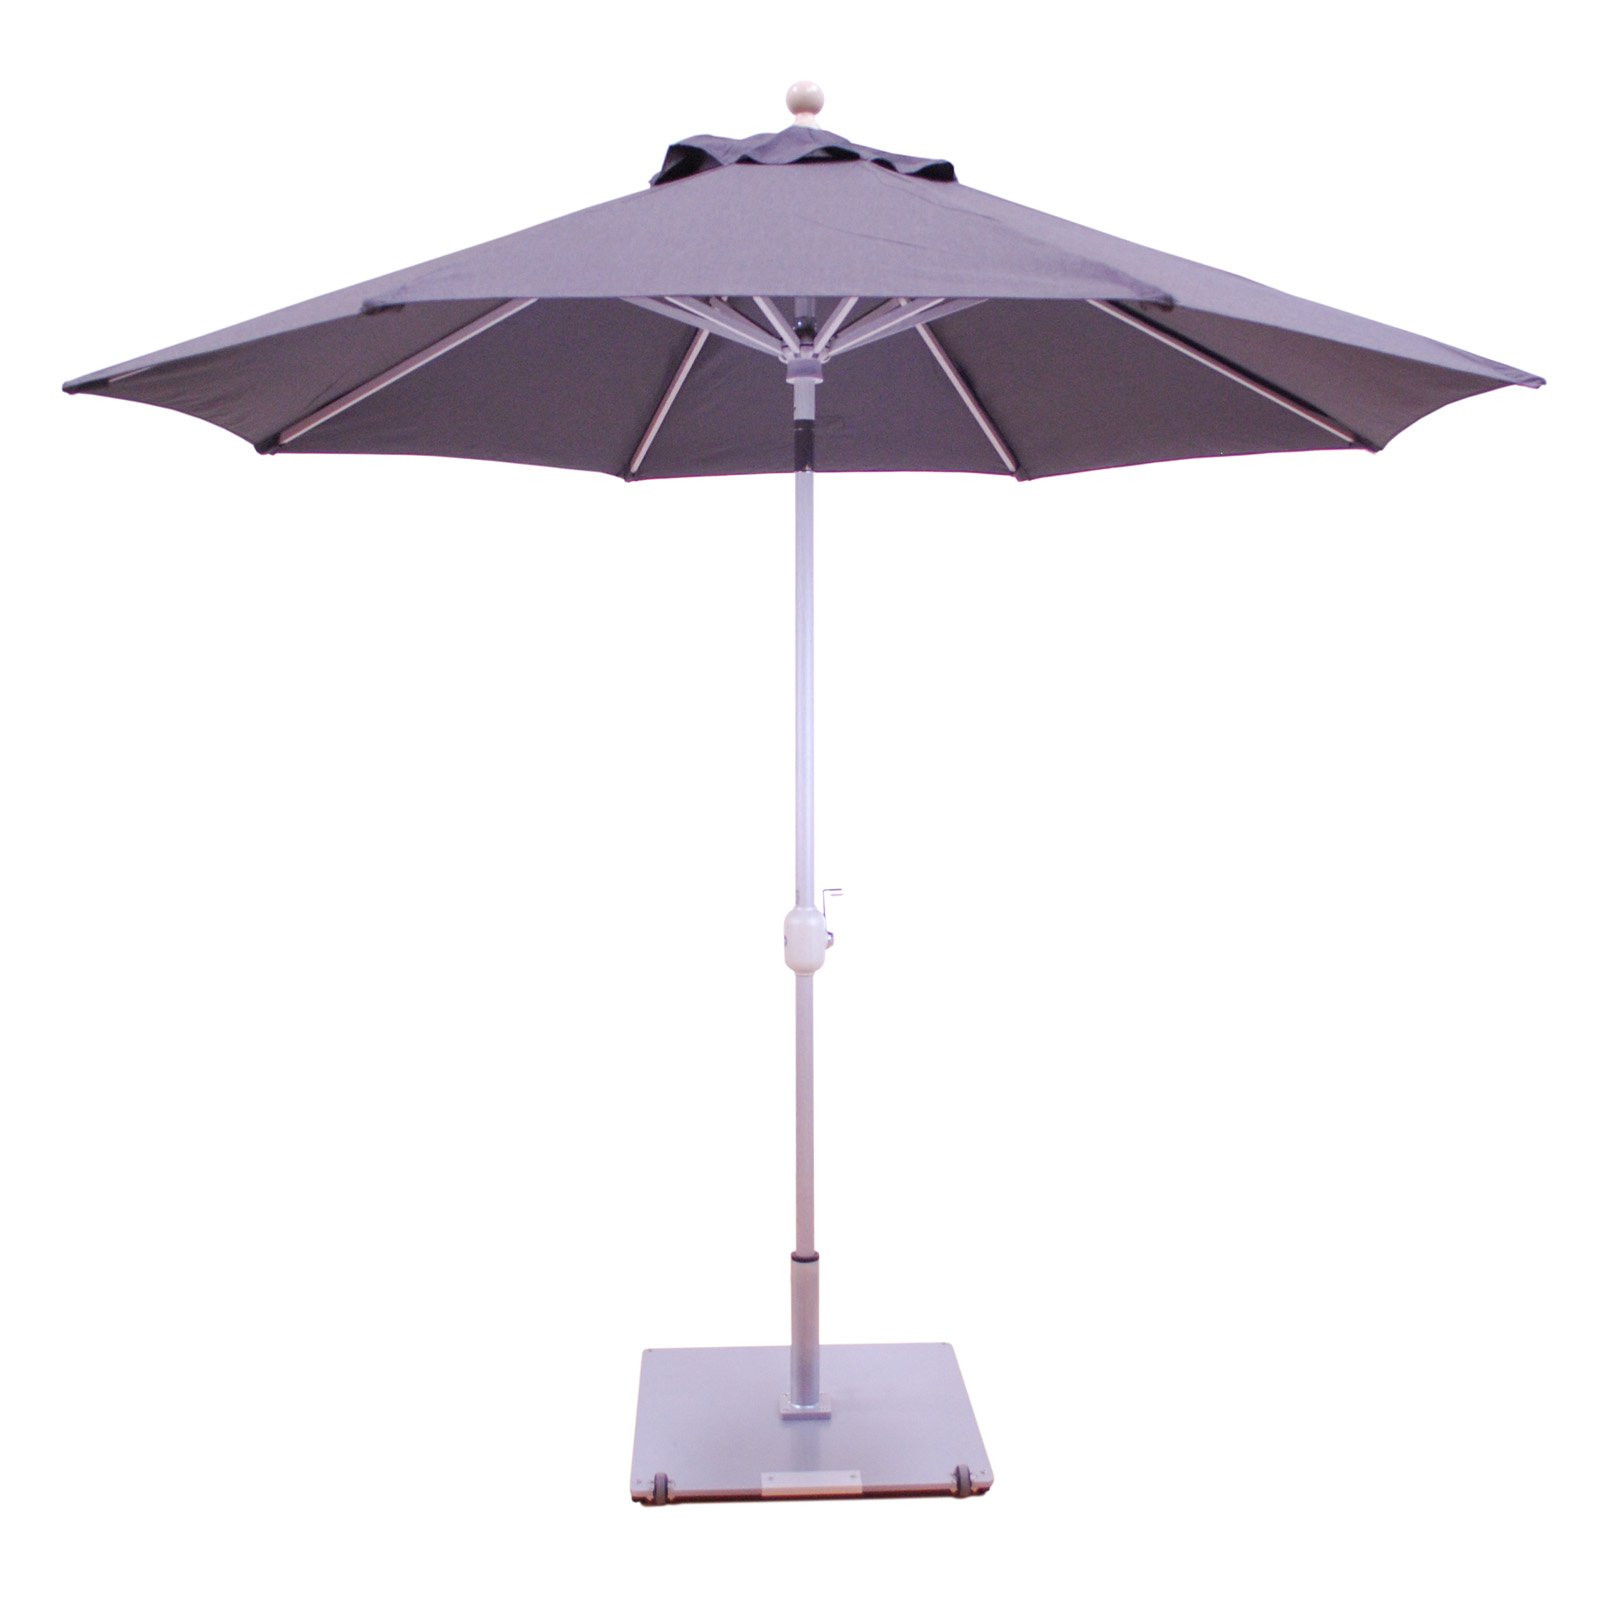 Best ideas about Sunbrella Patio Umbrellas
. Save or Pin Galtech 9 ft Sunbrella Aluminum Patio Umbrella with Auto Now.